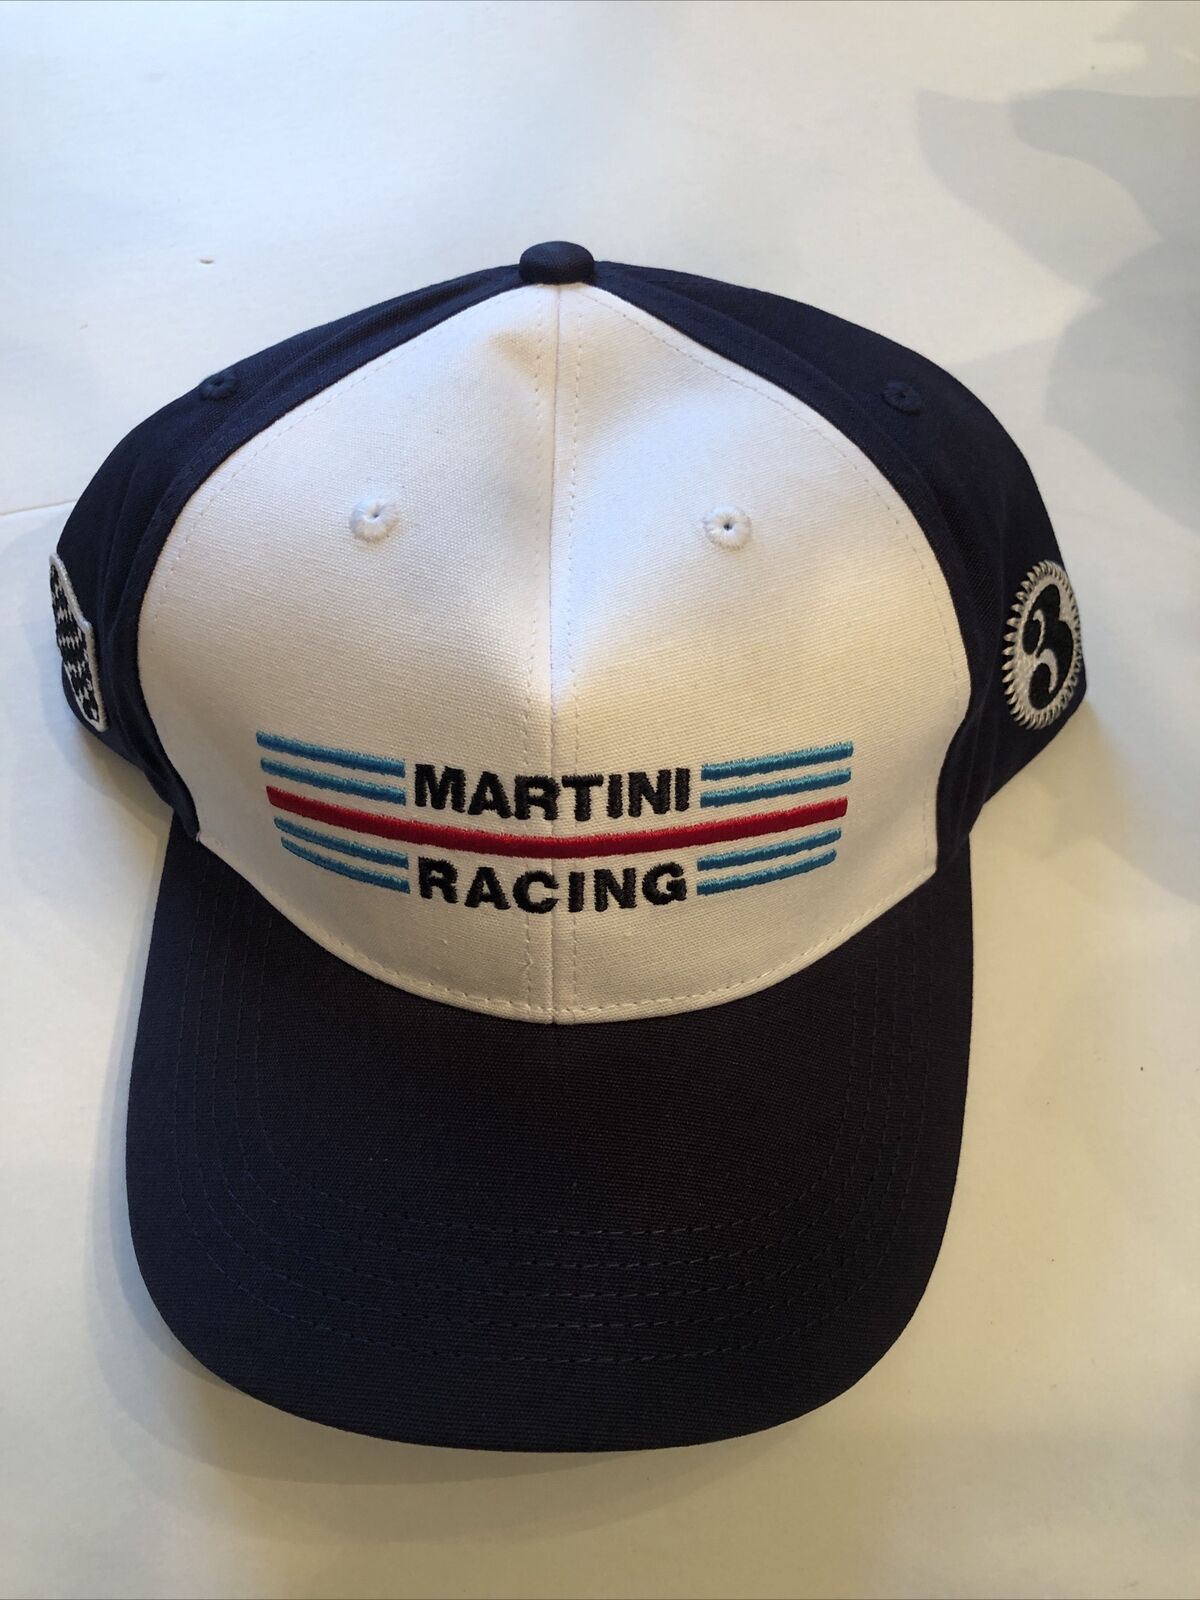 AWESOME Brand new Porsche Martini racing cap